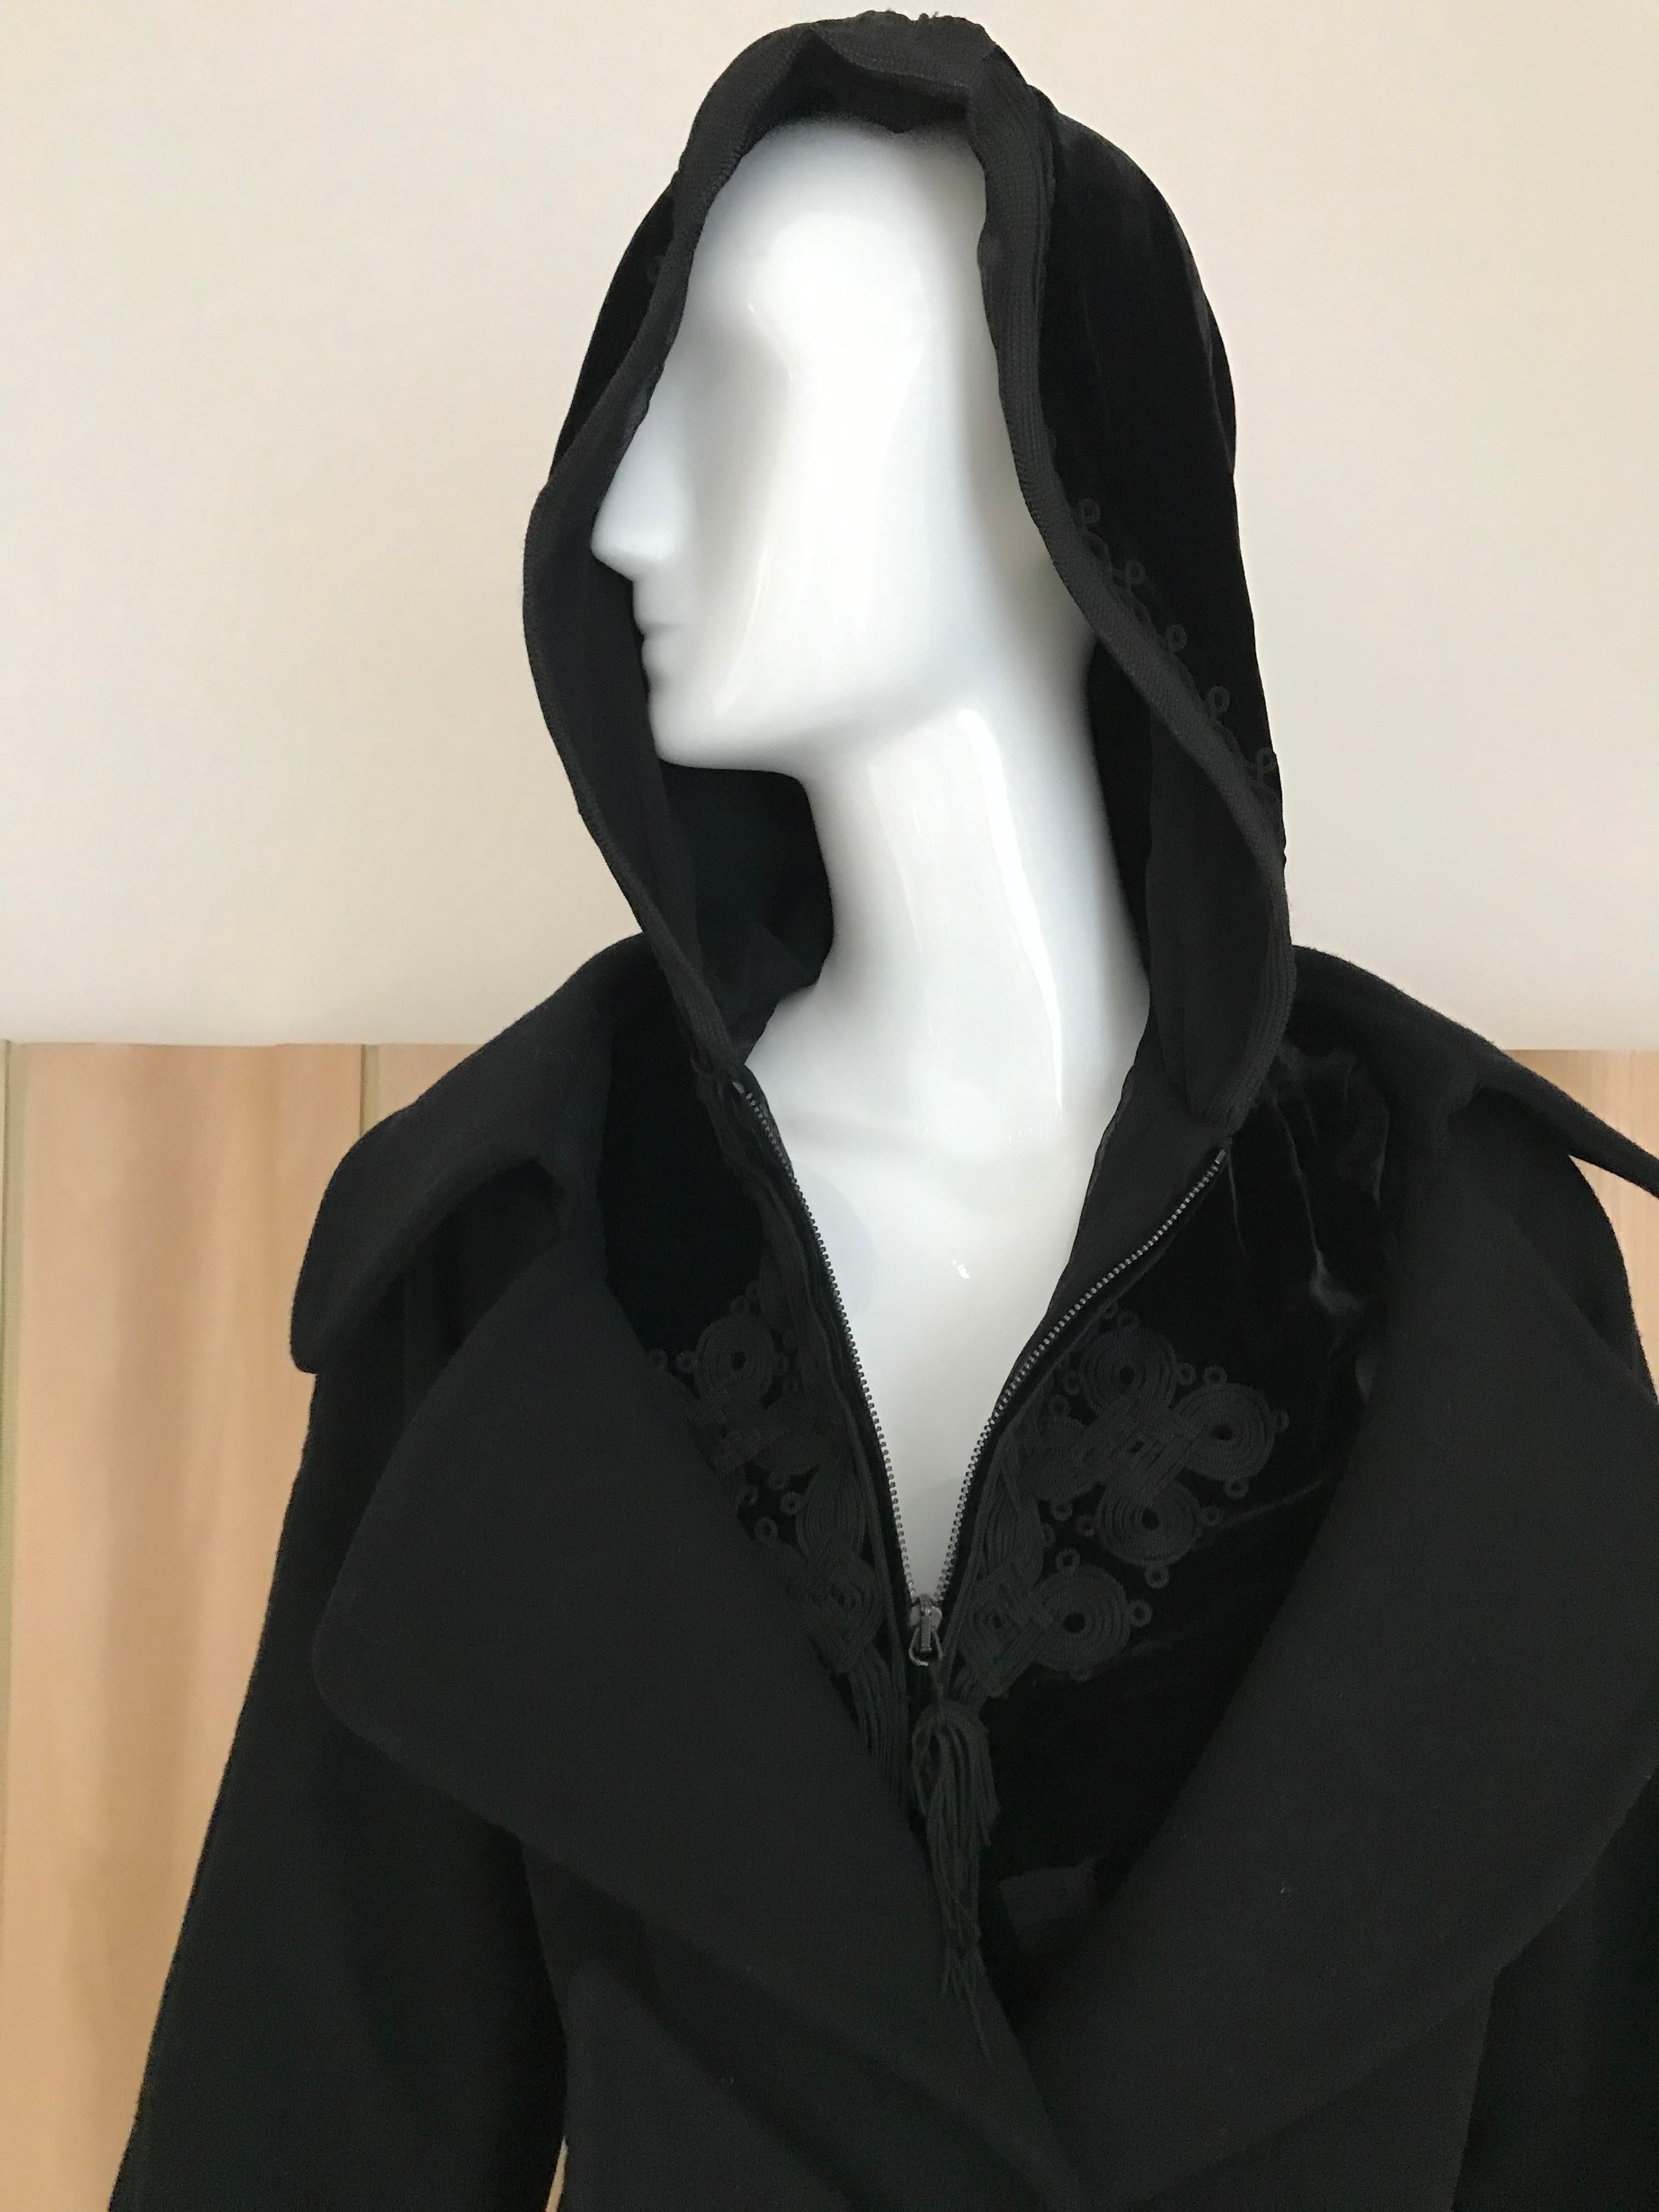 Jean Paul Gaultier Black Wool Coat with Silk Velvet Layer and Hood 3